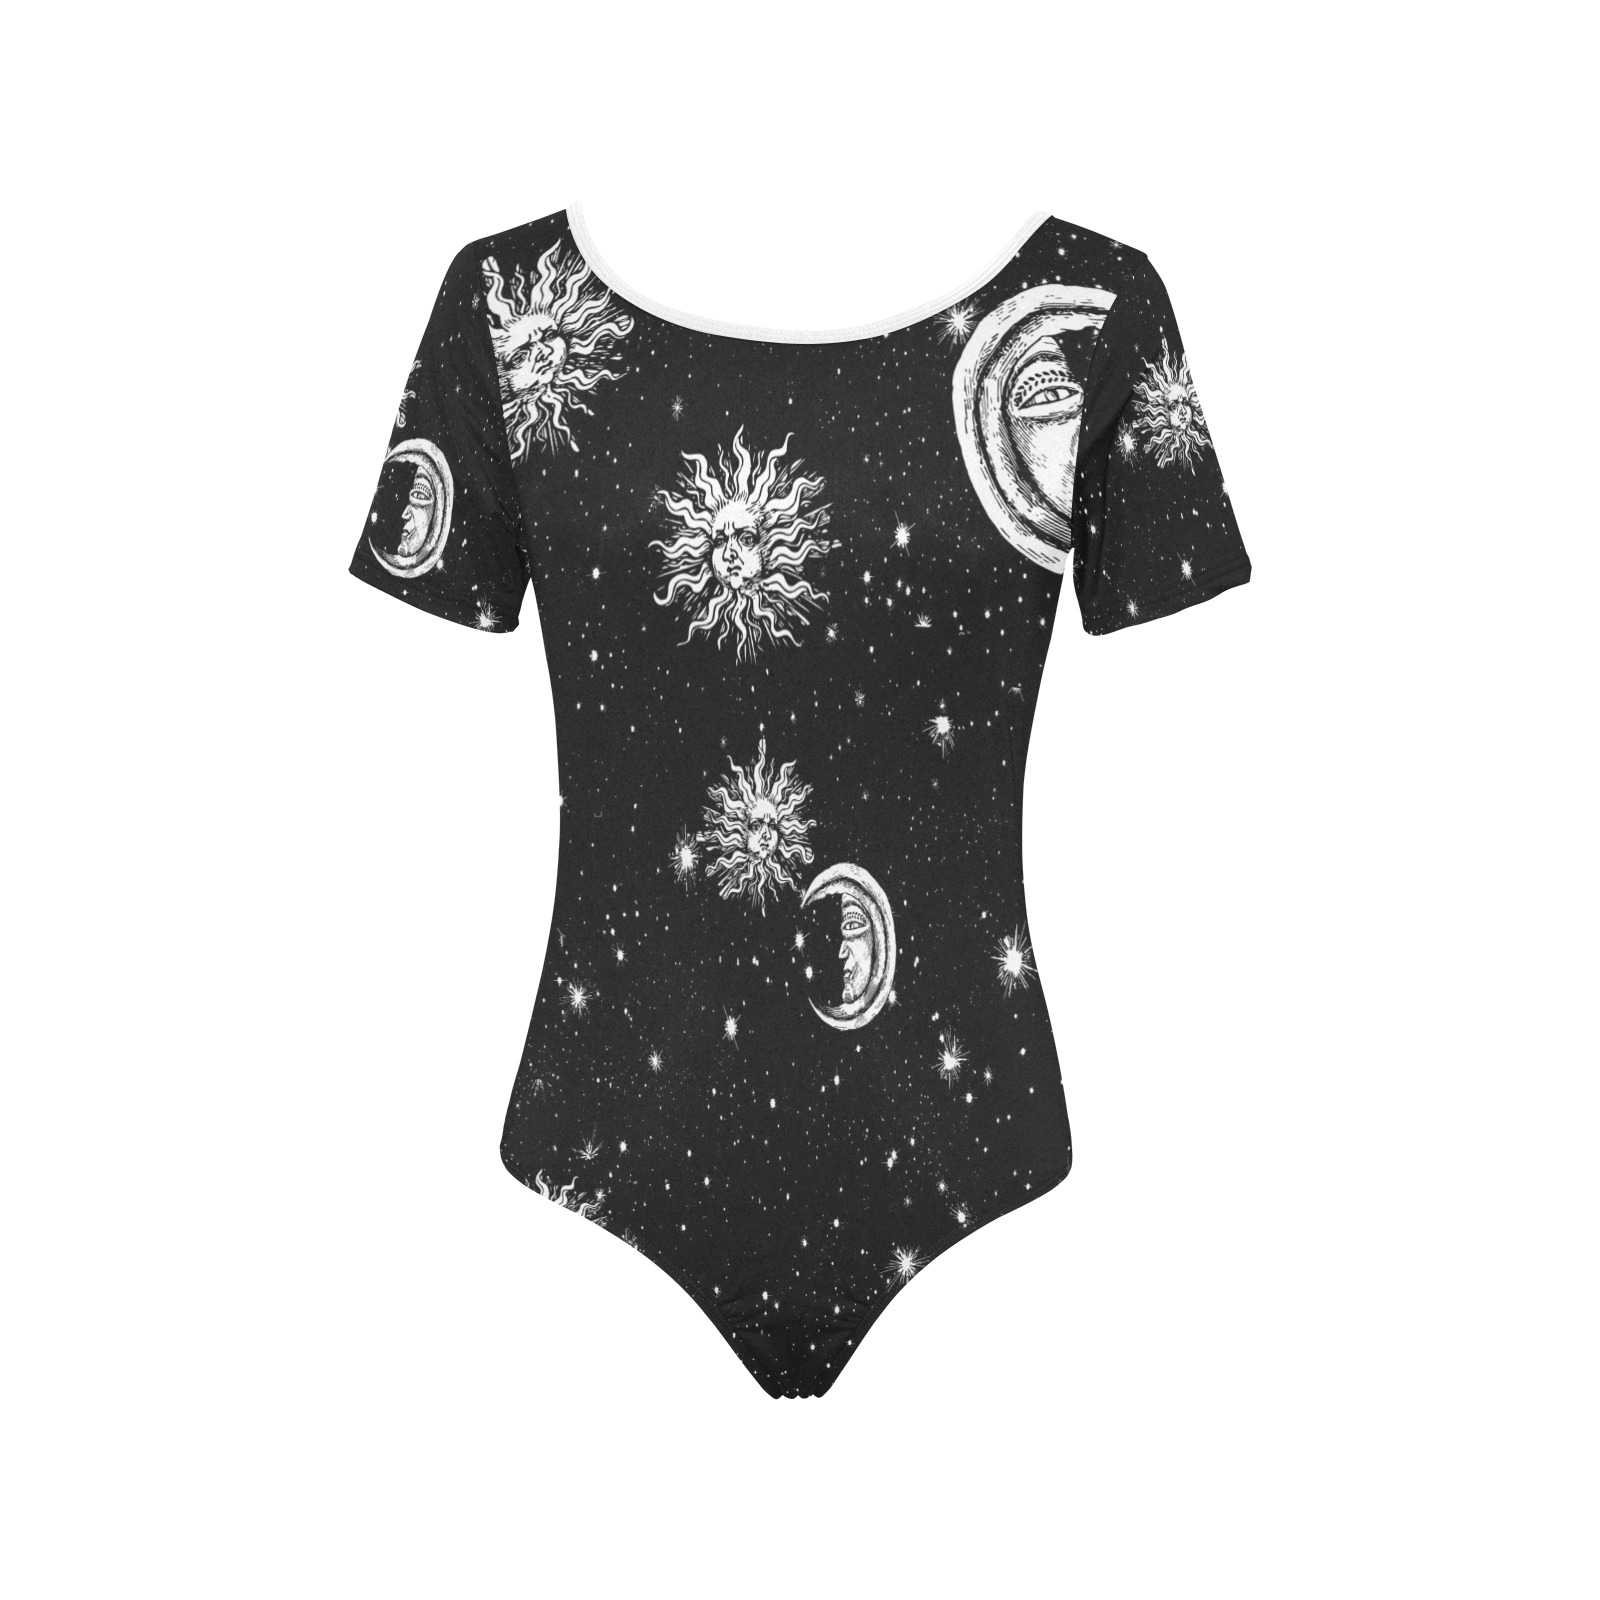 Mystic Sun, Moon and Stars Women's Short Sleeve Bodysuit